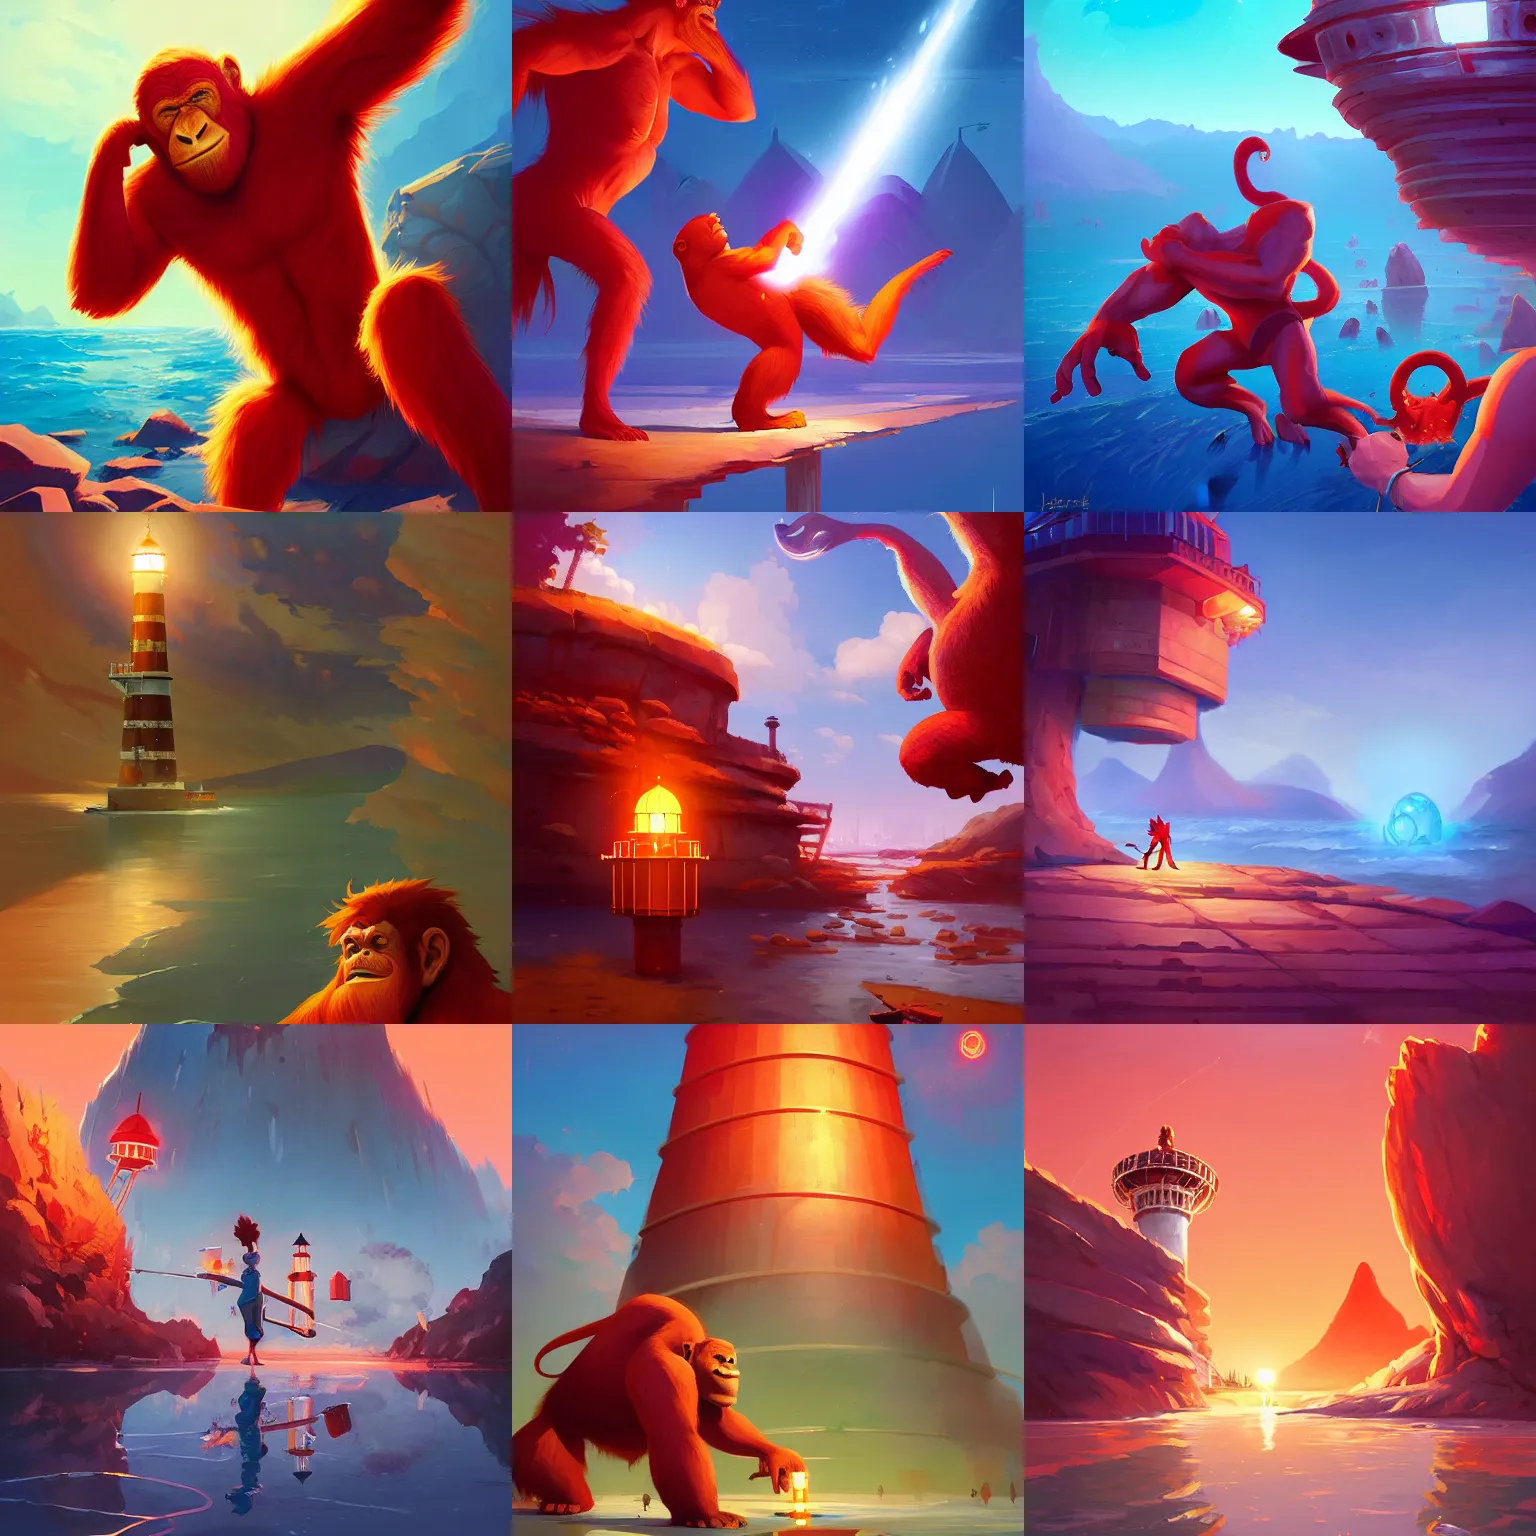 Prompt: hero world atari, red orangutan shake lighthouse as big shaker, behance hd by jesper ejsing, by rhads, makoto shinkai and lois van baarle, ilya kuvshinov, rossdraws global illumination